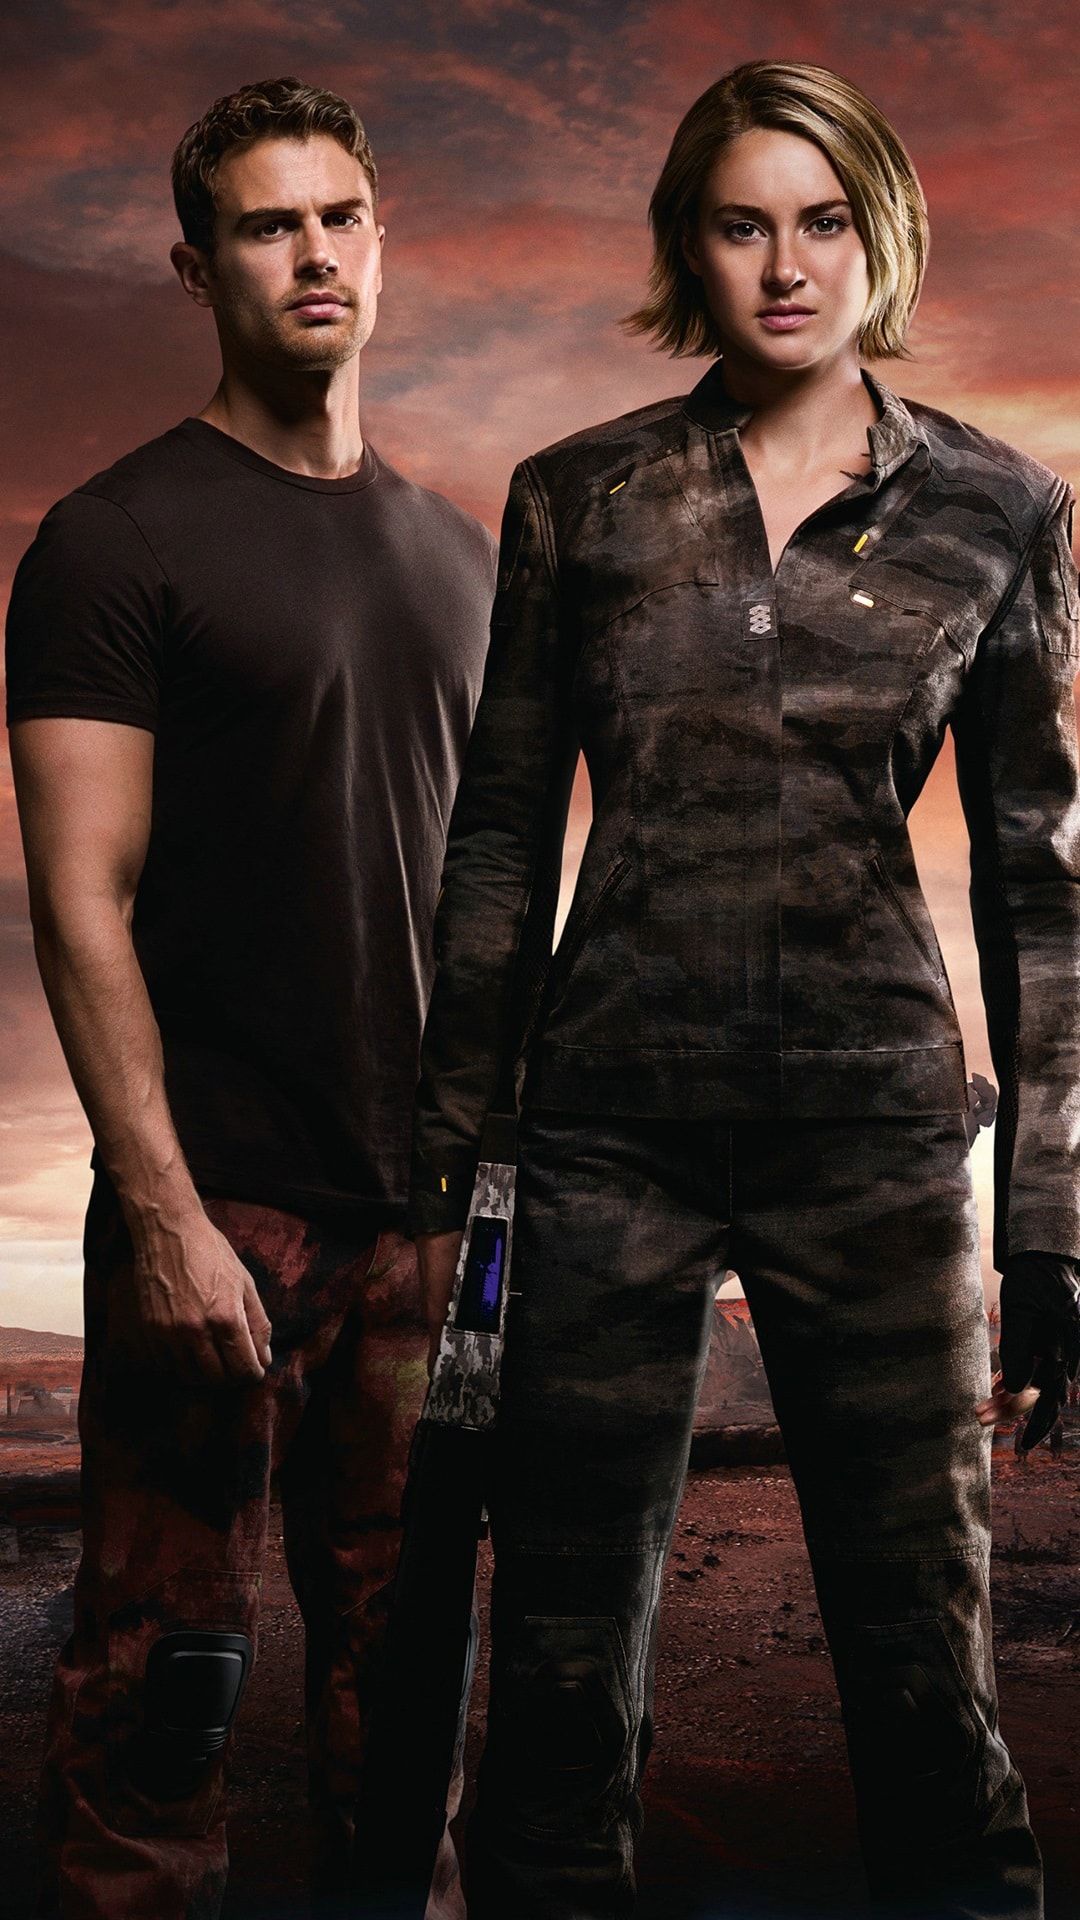 The Divergent Series: Allegiant HD Wallpaperwallpaper.net